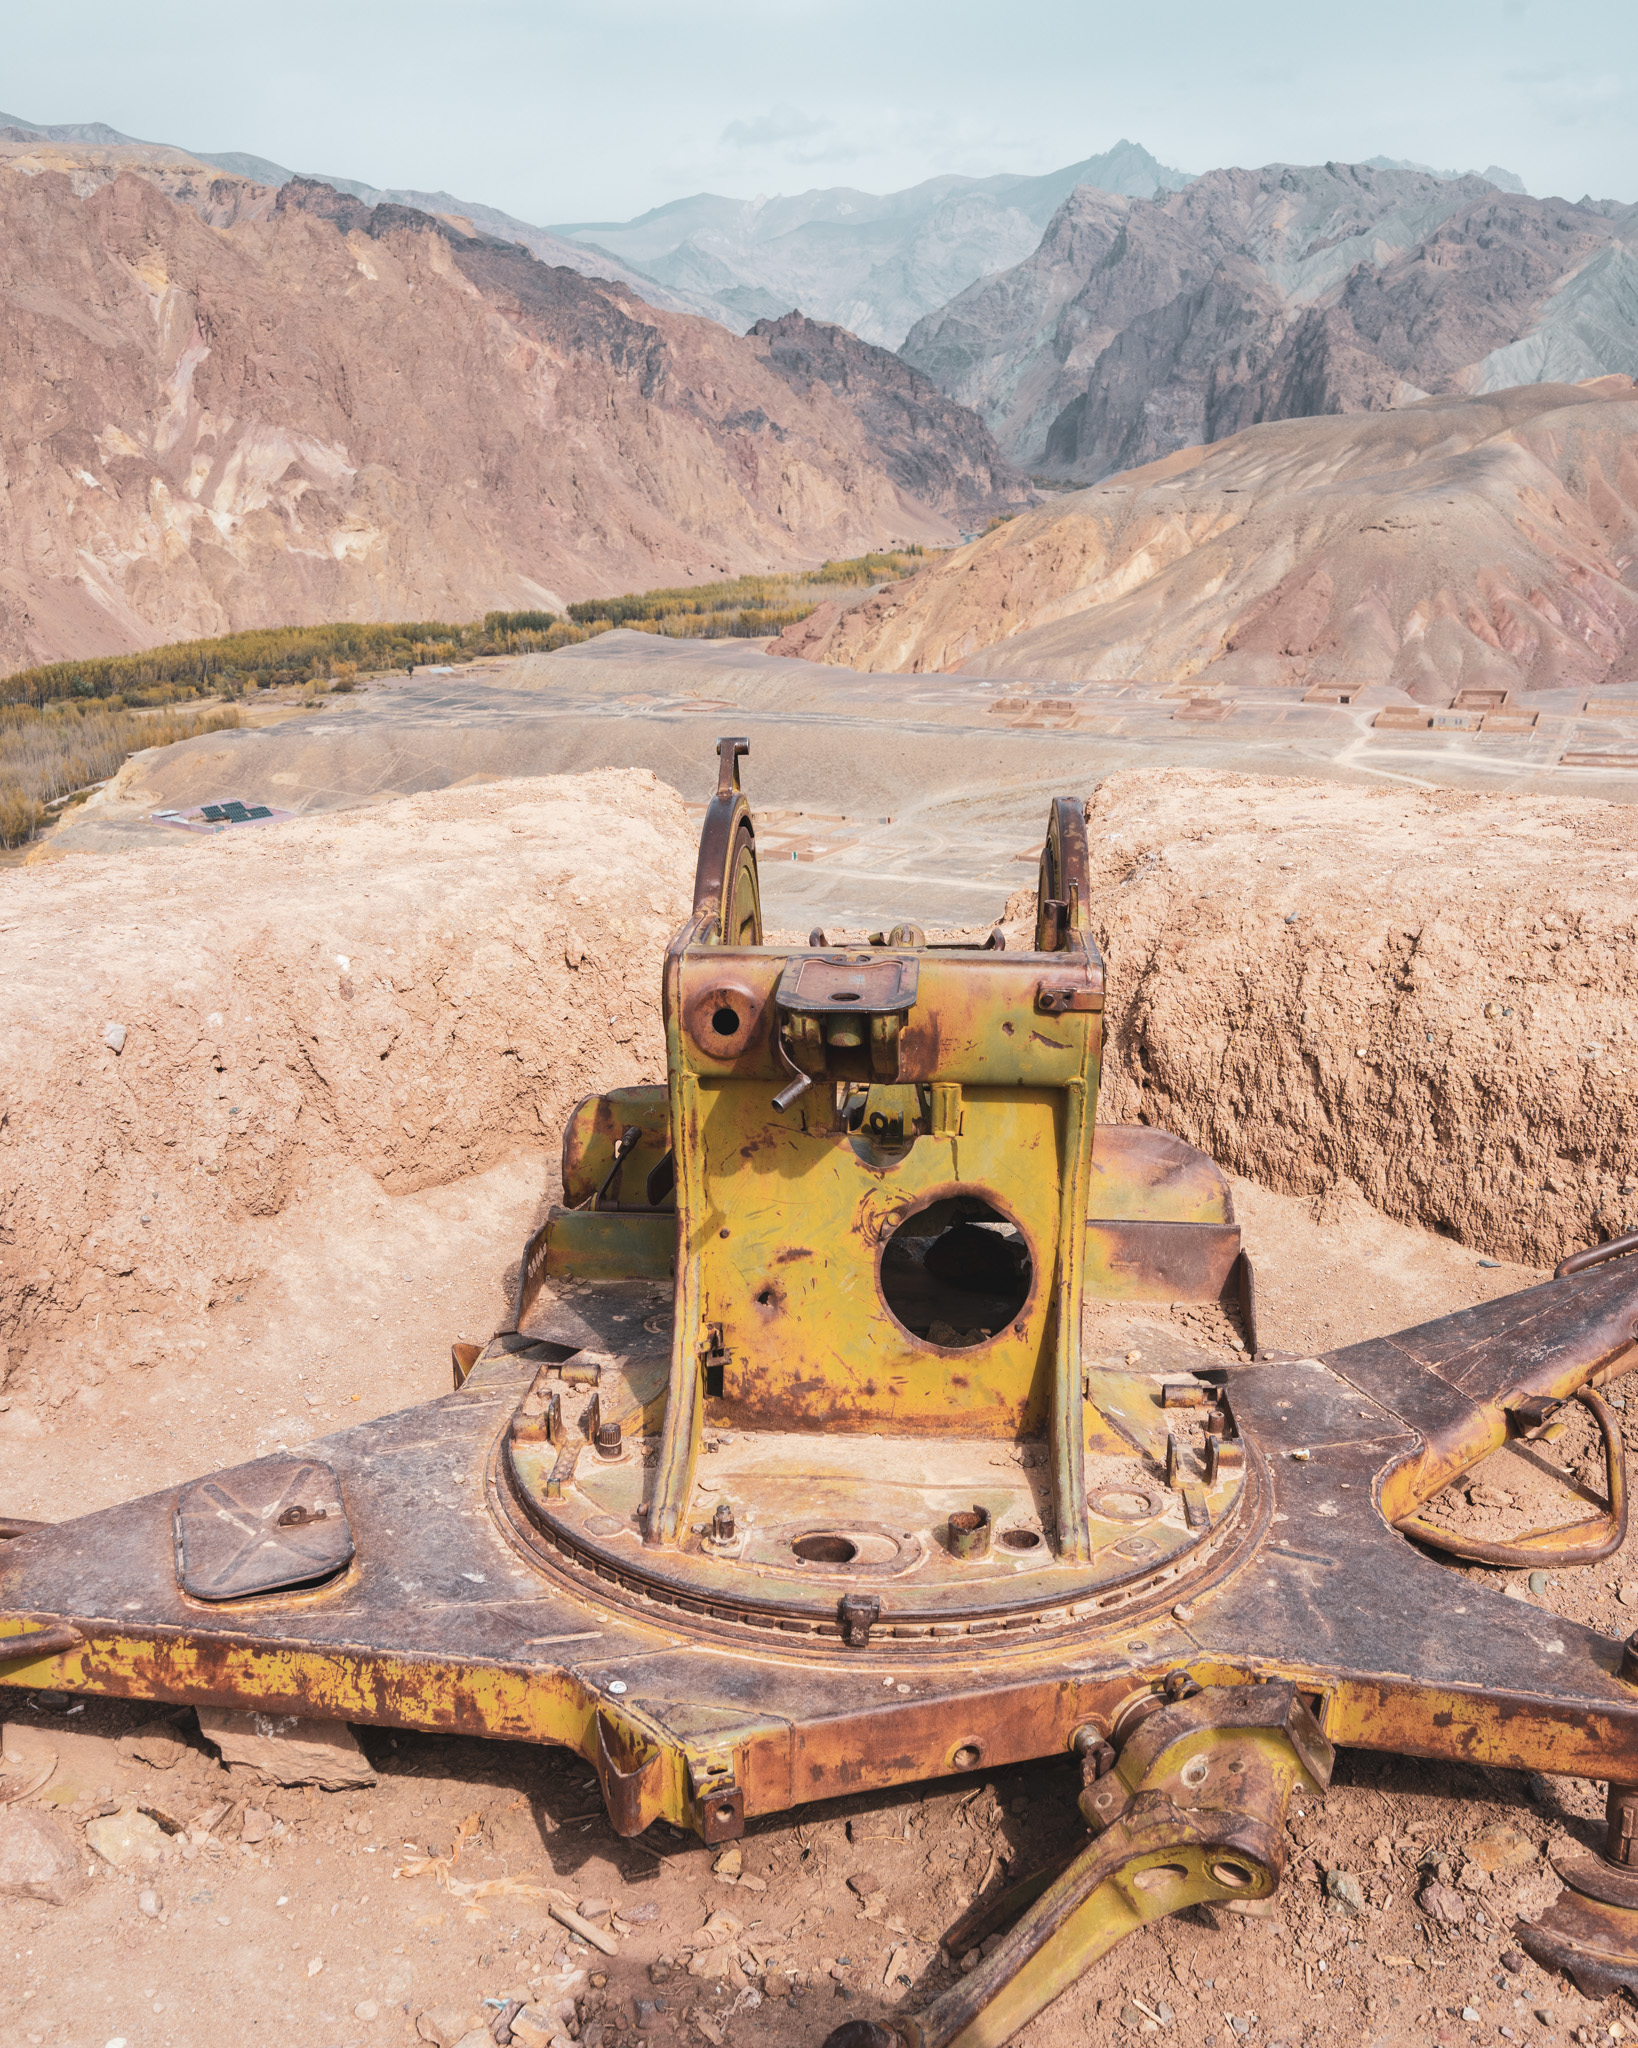 An old Soviet gun guarding the Ghorband entrance to Bamiyan